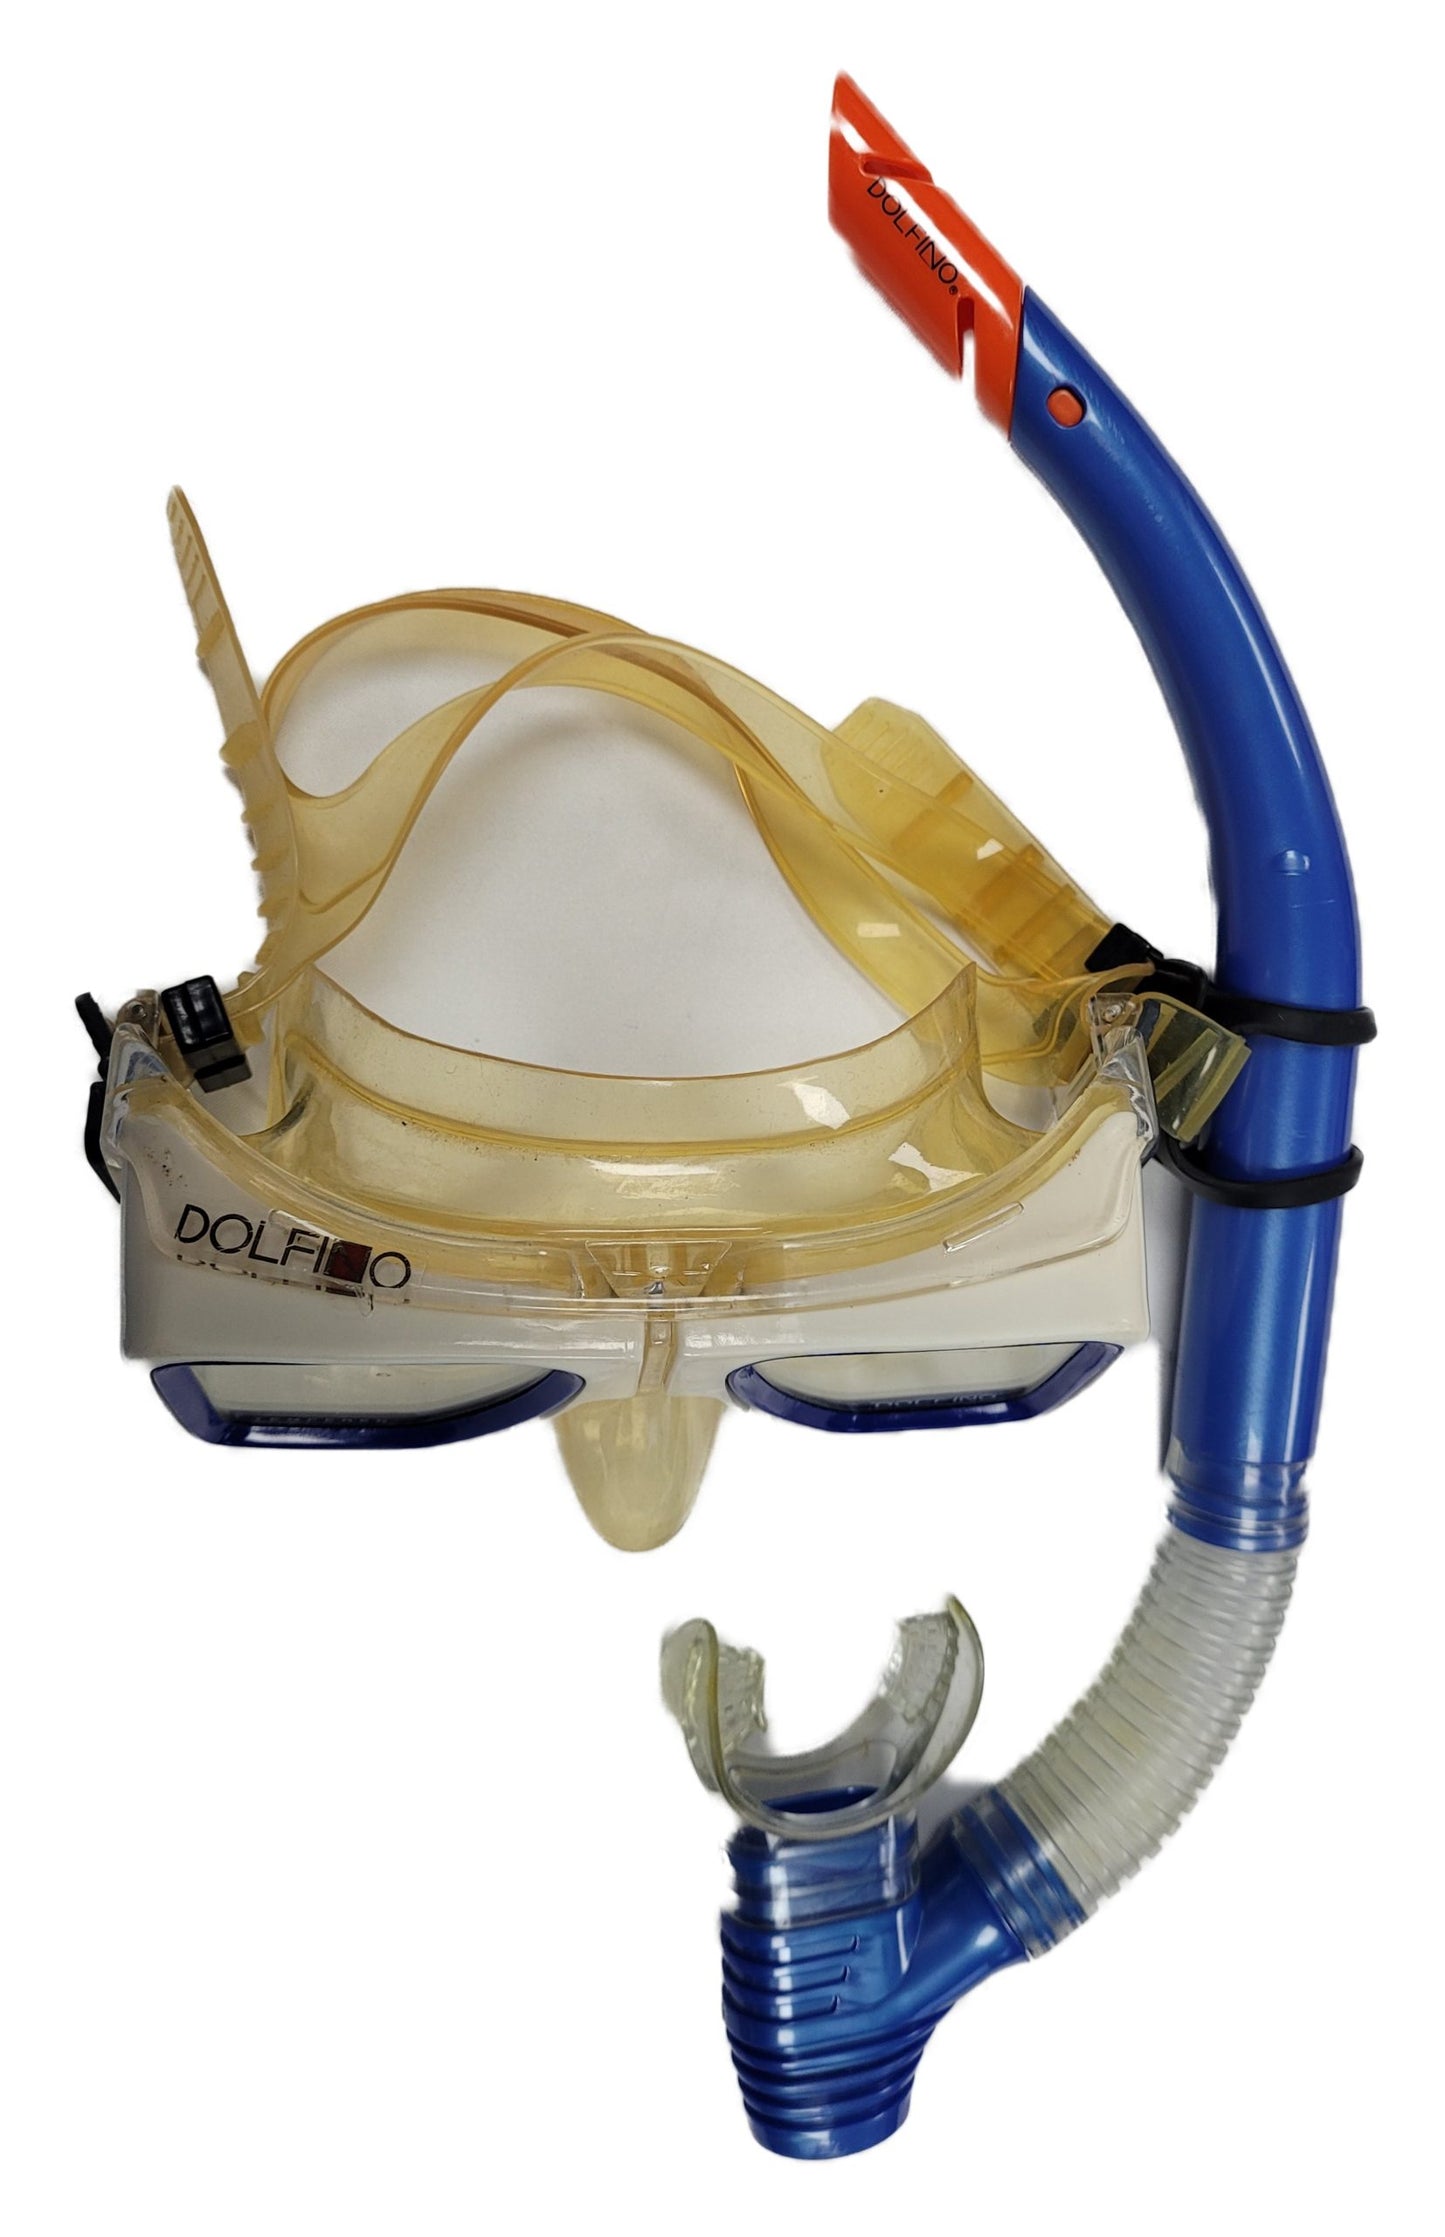 Dolfino Dive Mask and Dry Snorkel Combo